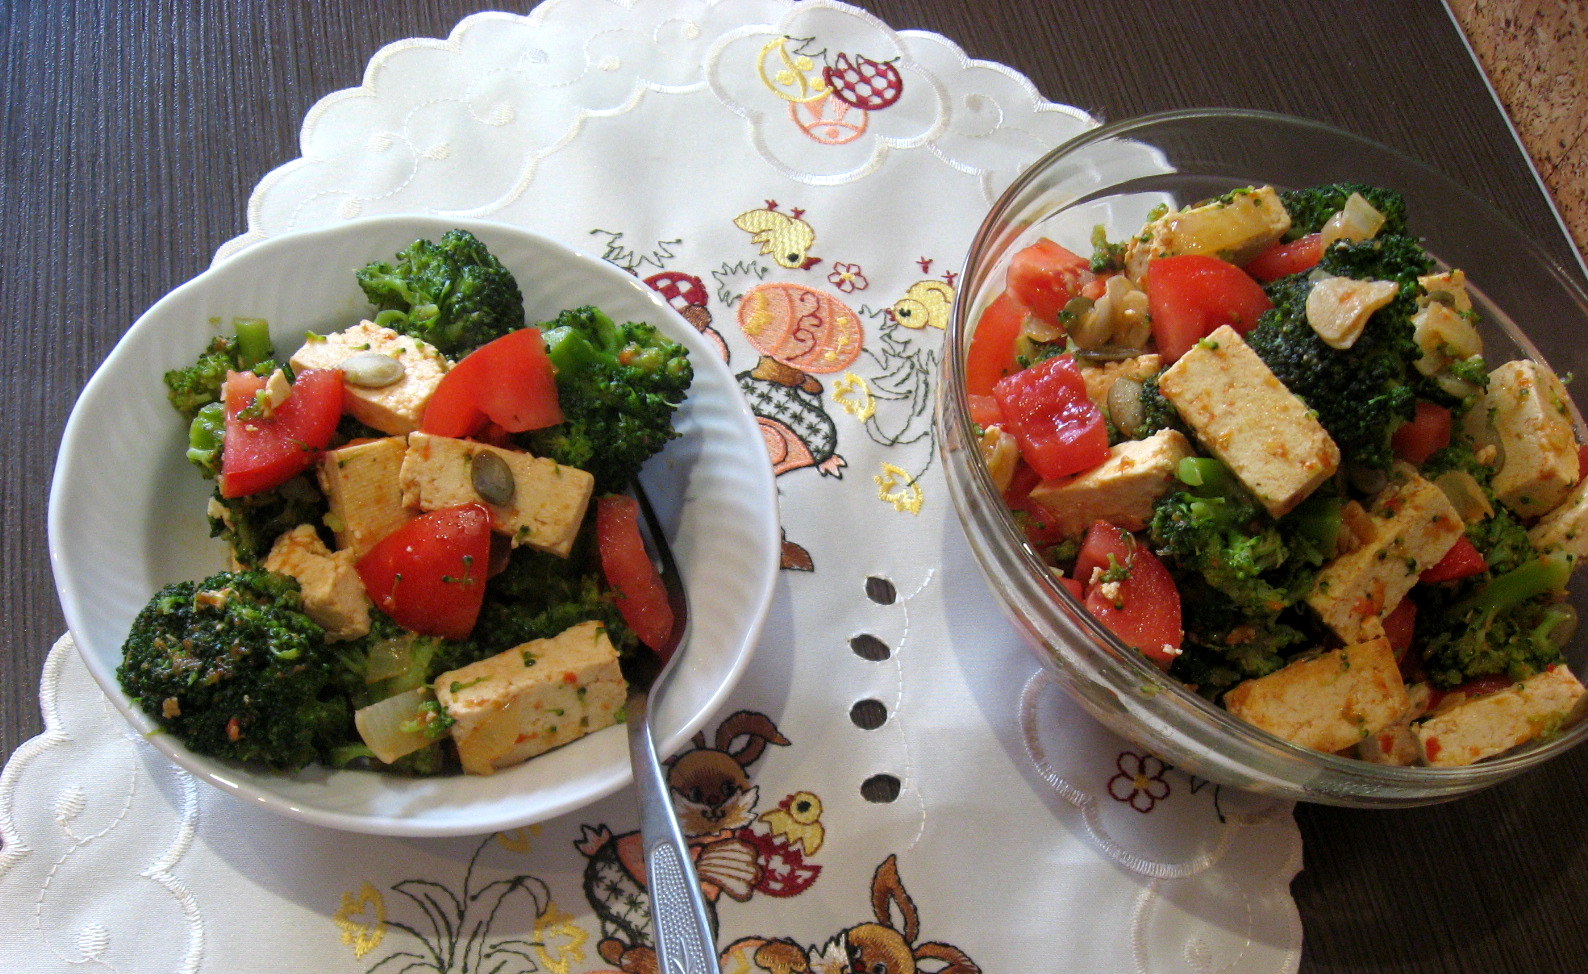 Salata de broccoli cu tofu